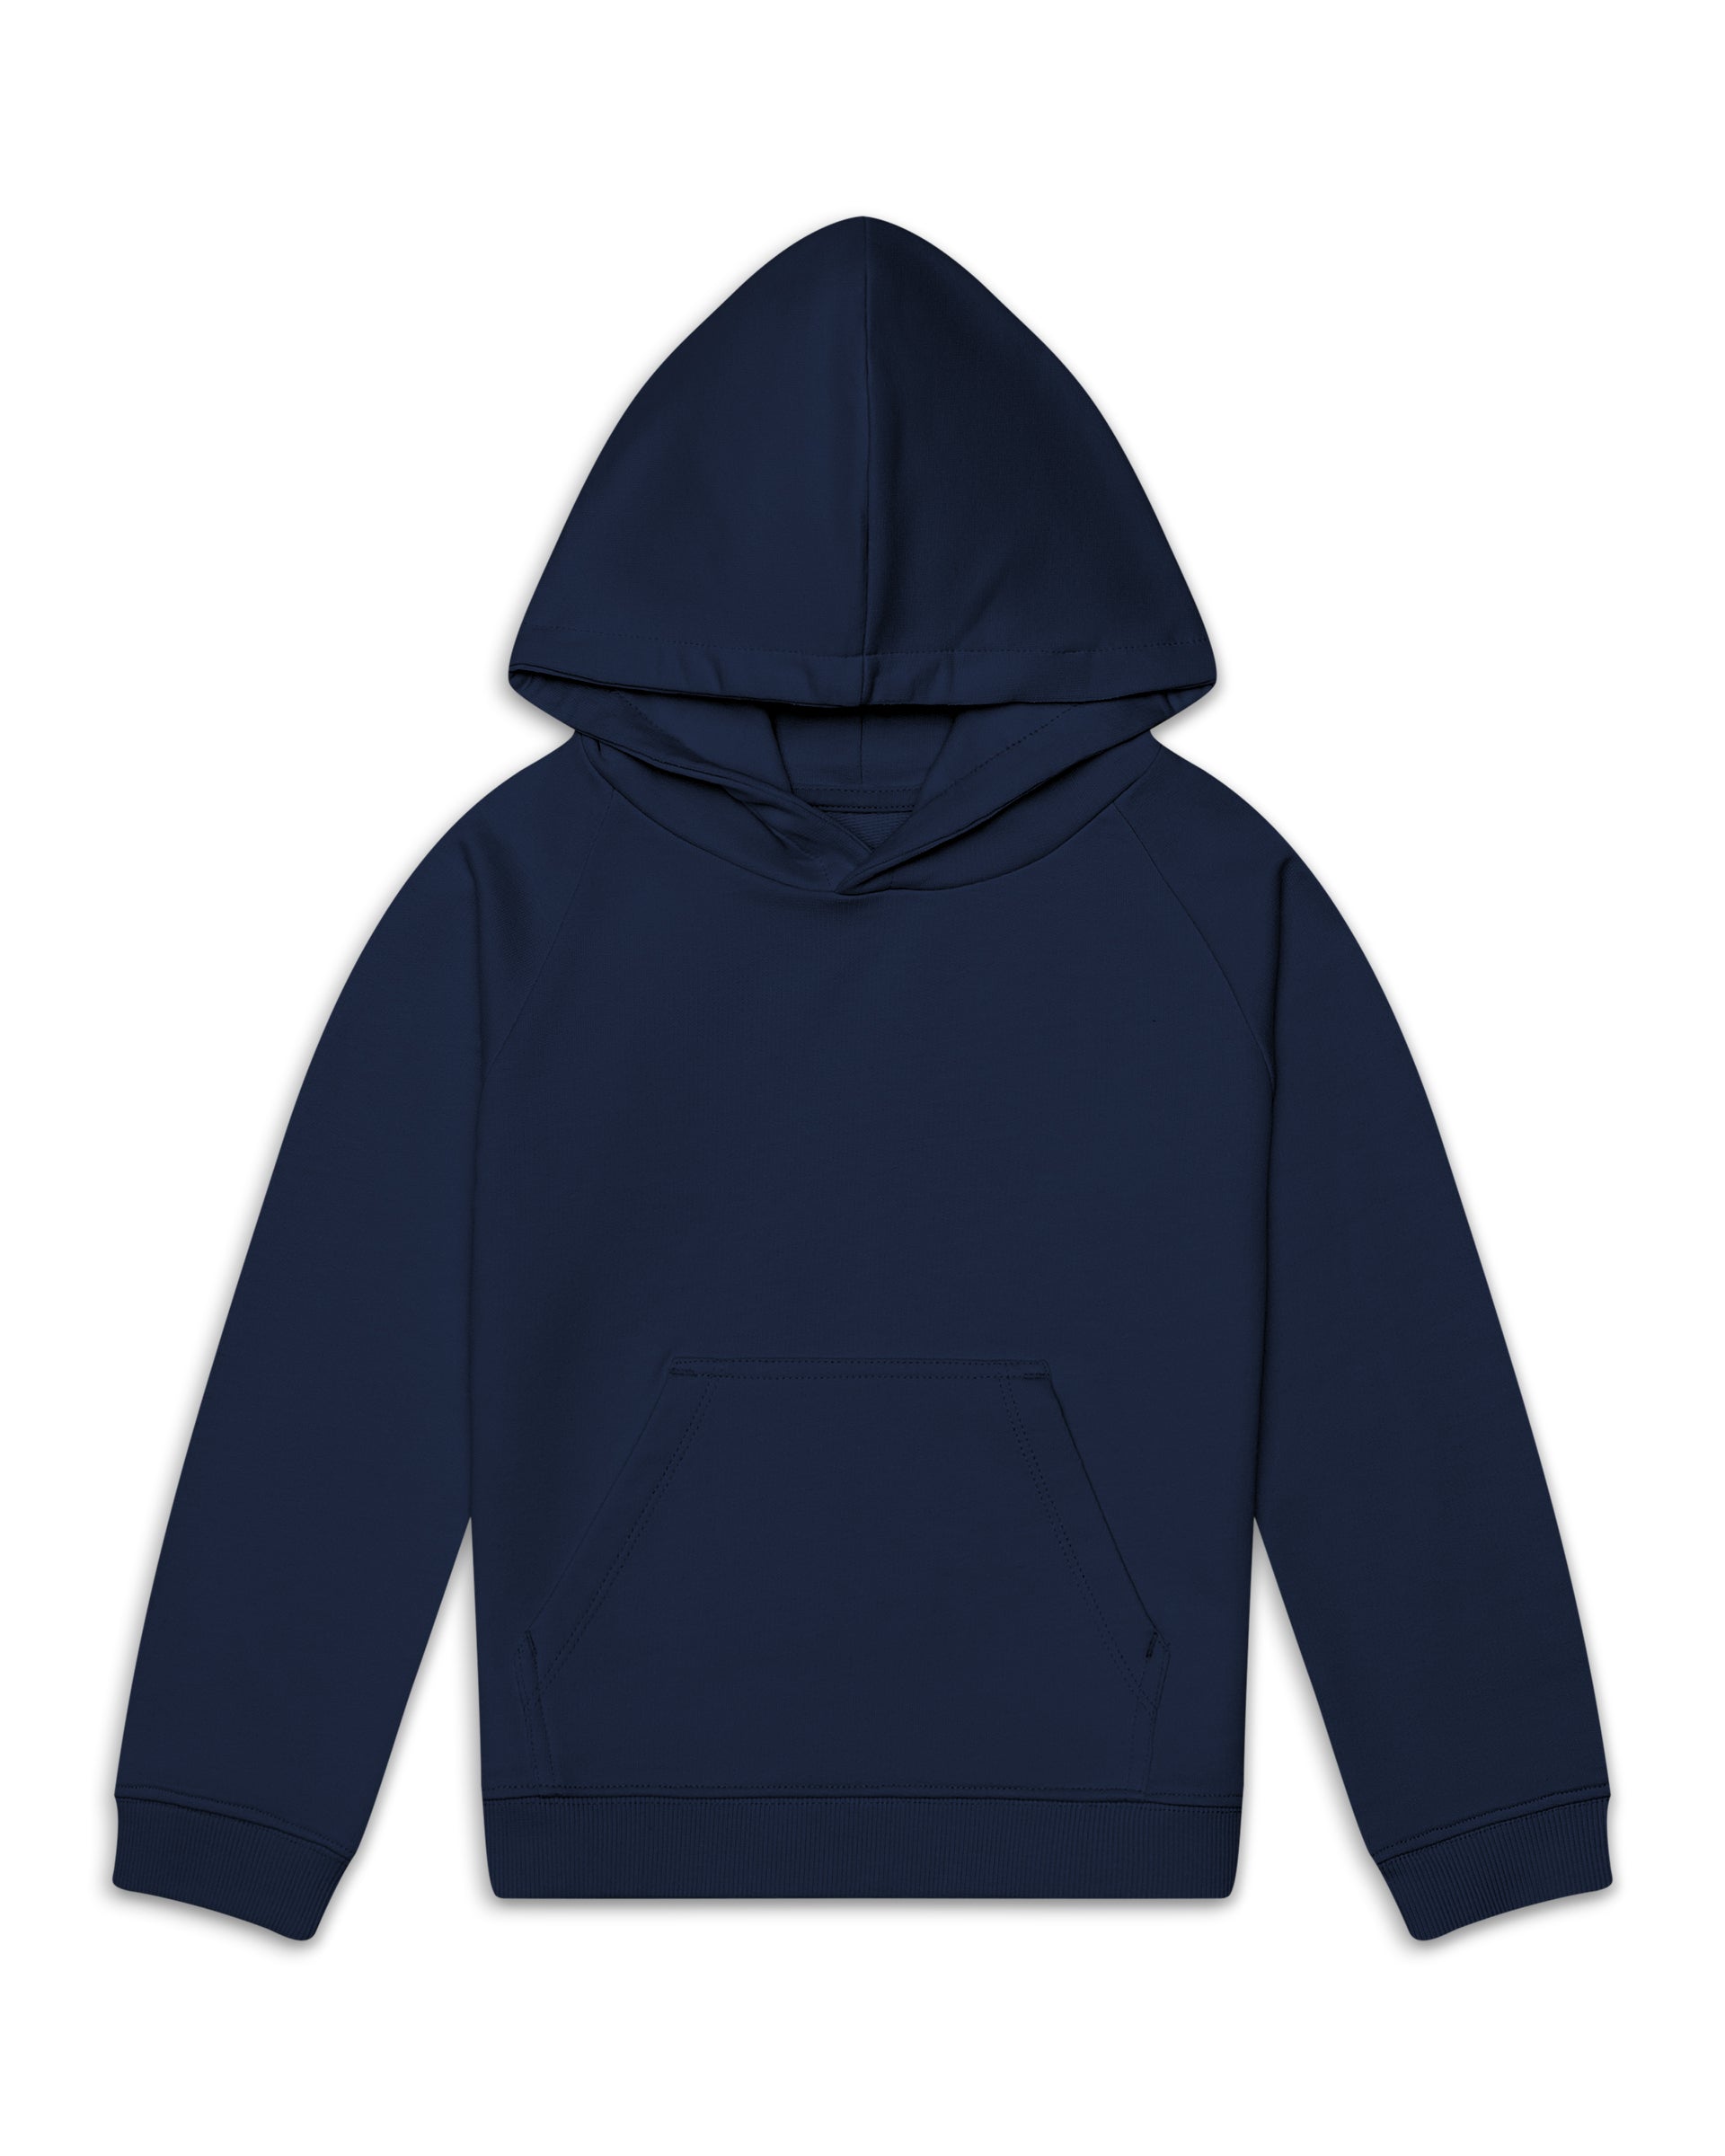 The Organic Hoodie Sweatshirt [Navy]